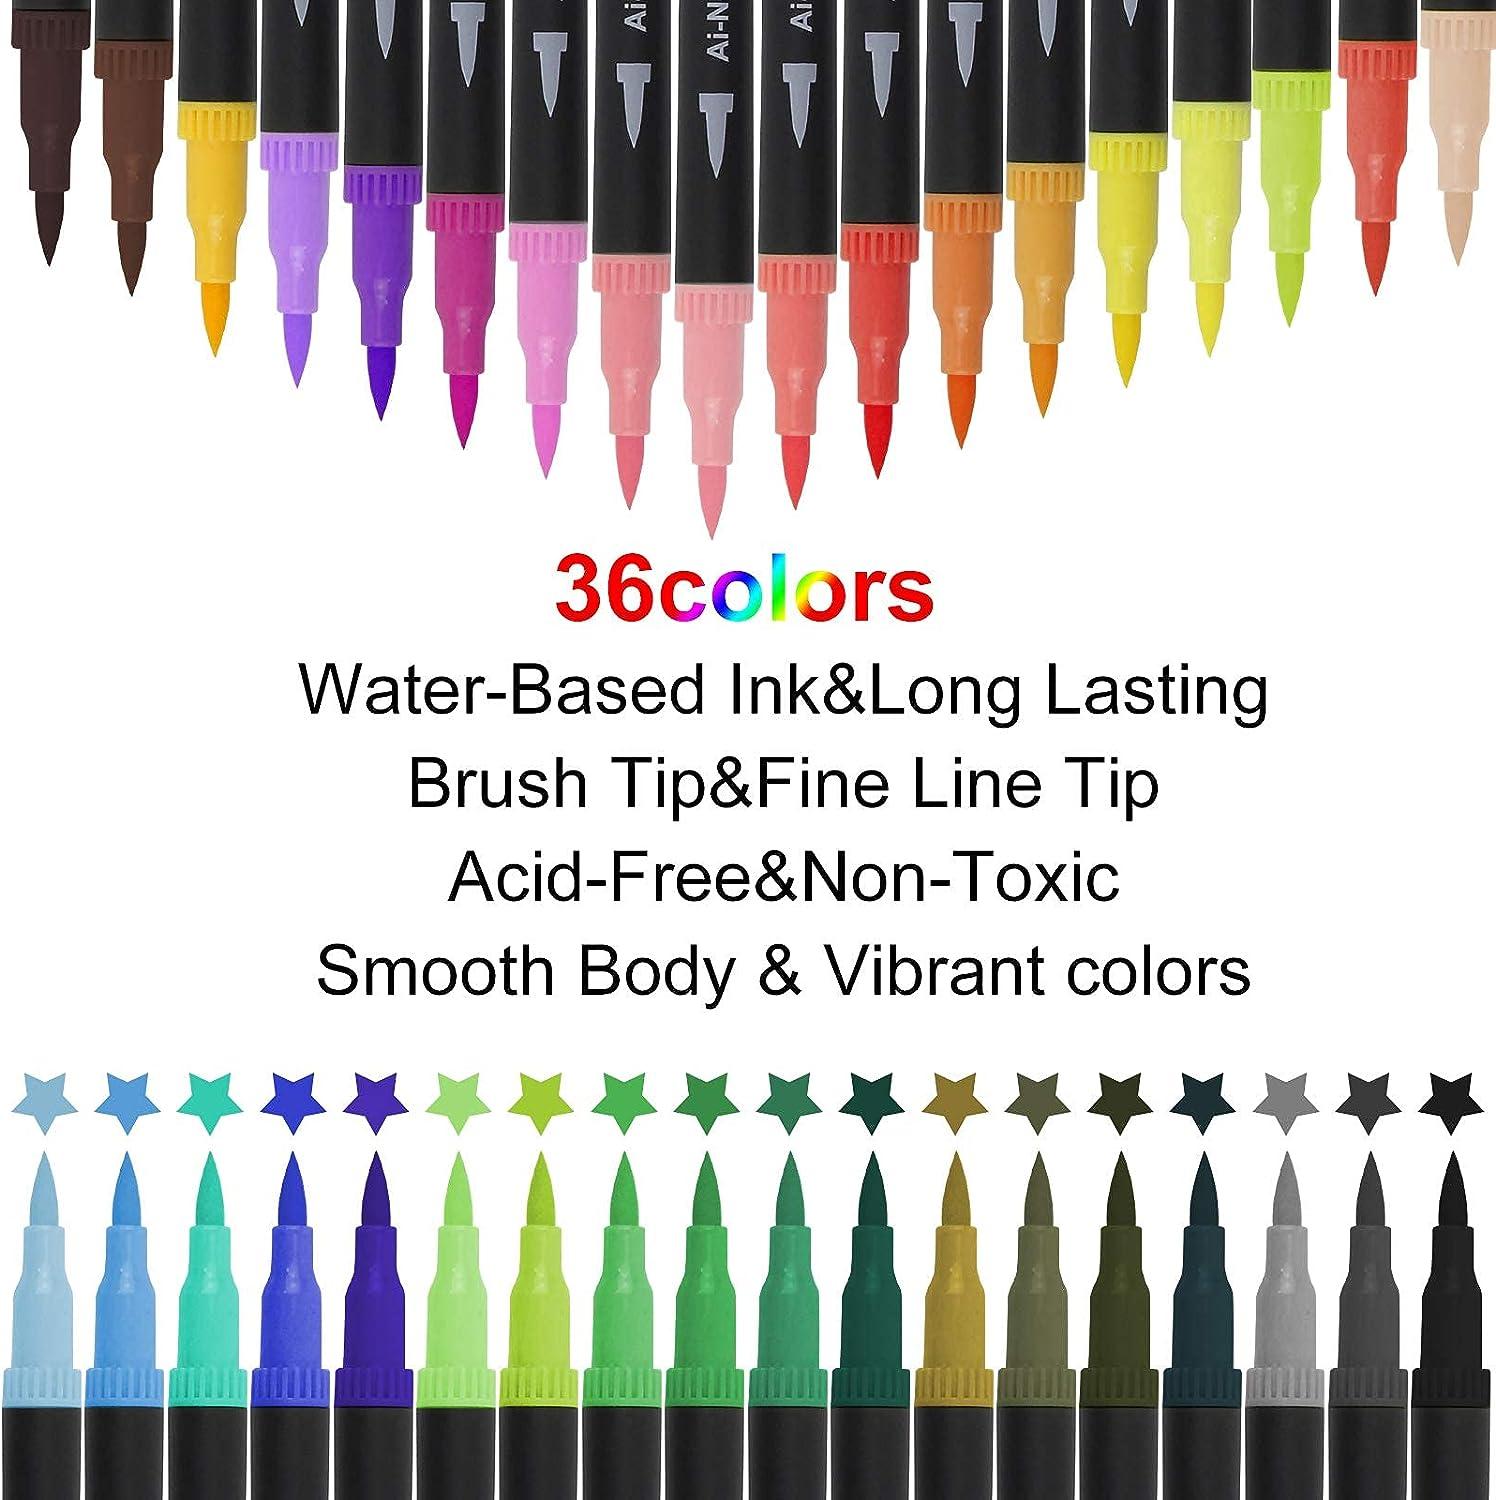 ai-natebok 36 Colored Fineliner Pens Fine Tip Pens Porous Fineliner Color  Pens for Journal Planner Writing Note Taking Calendar Agenda Coloring Art  School Office Supplies 36 Single Pens